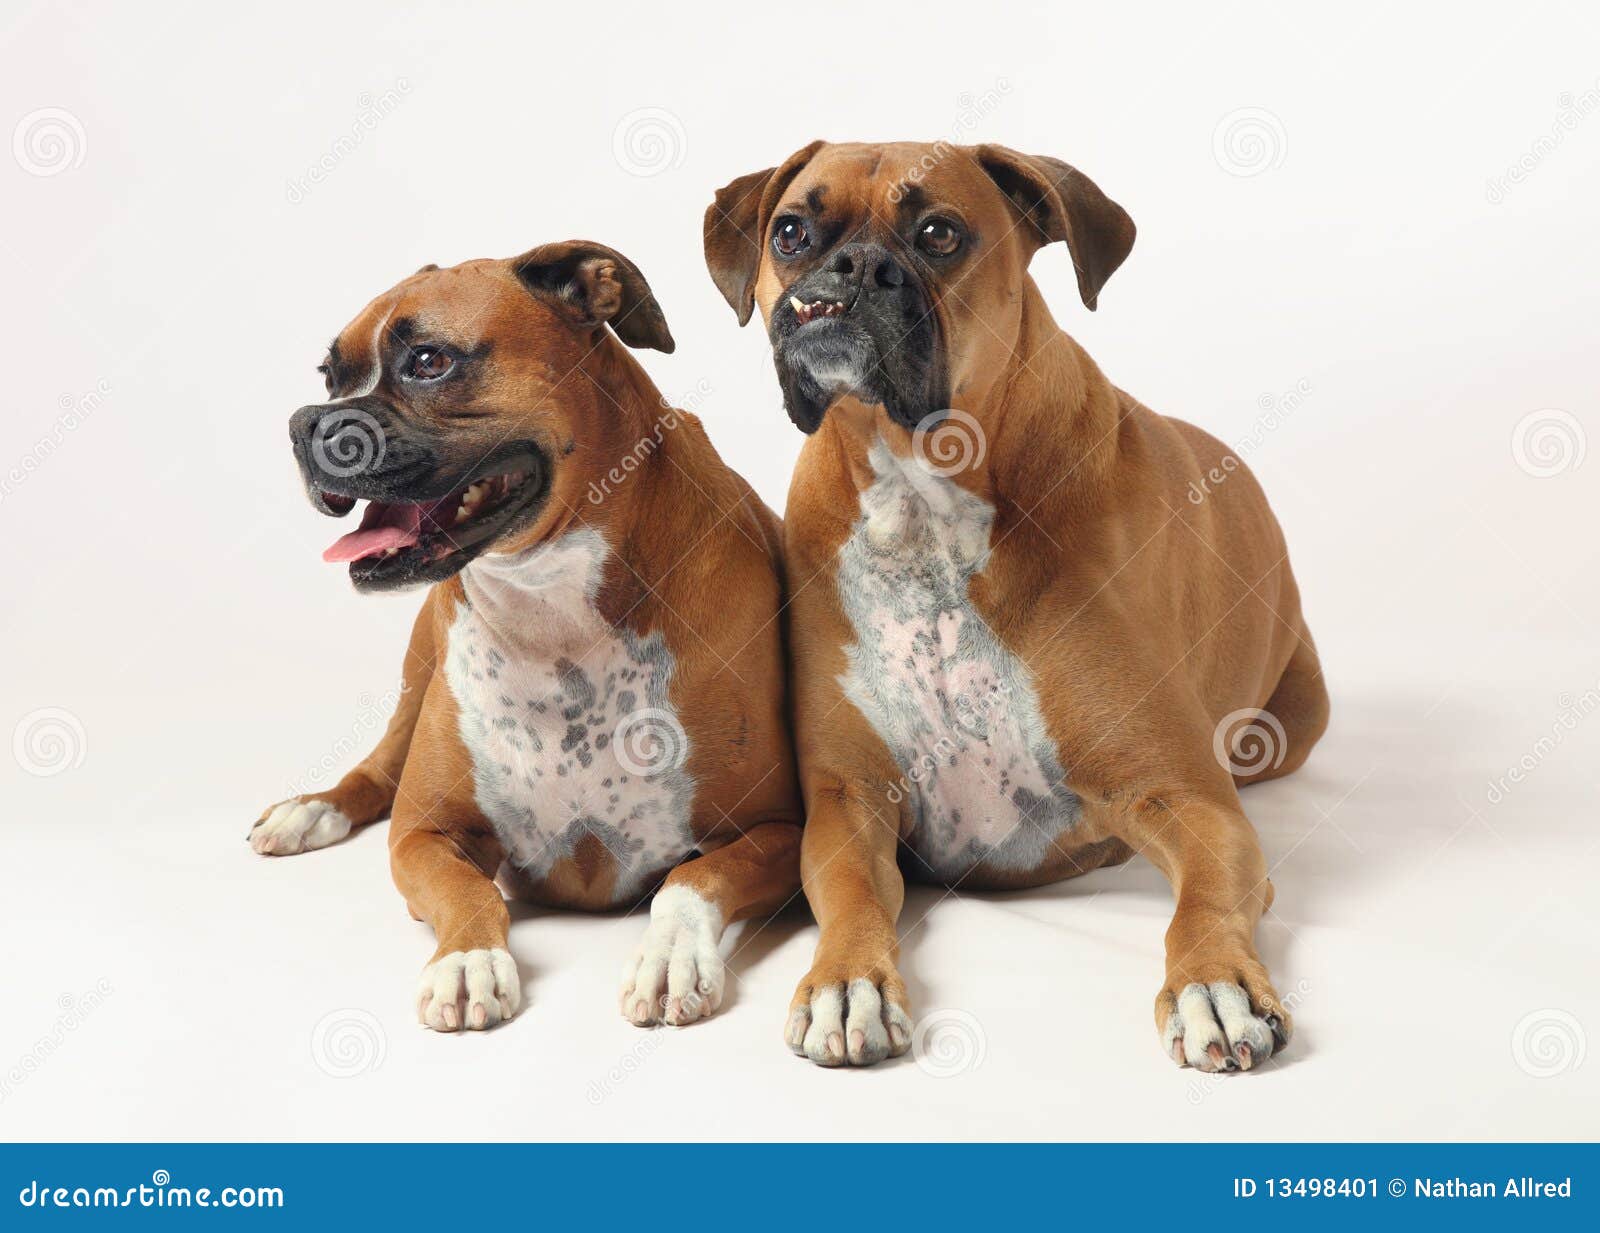 Get cairn terrier puppies for sale in ohio